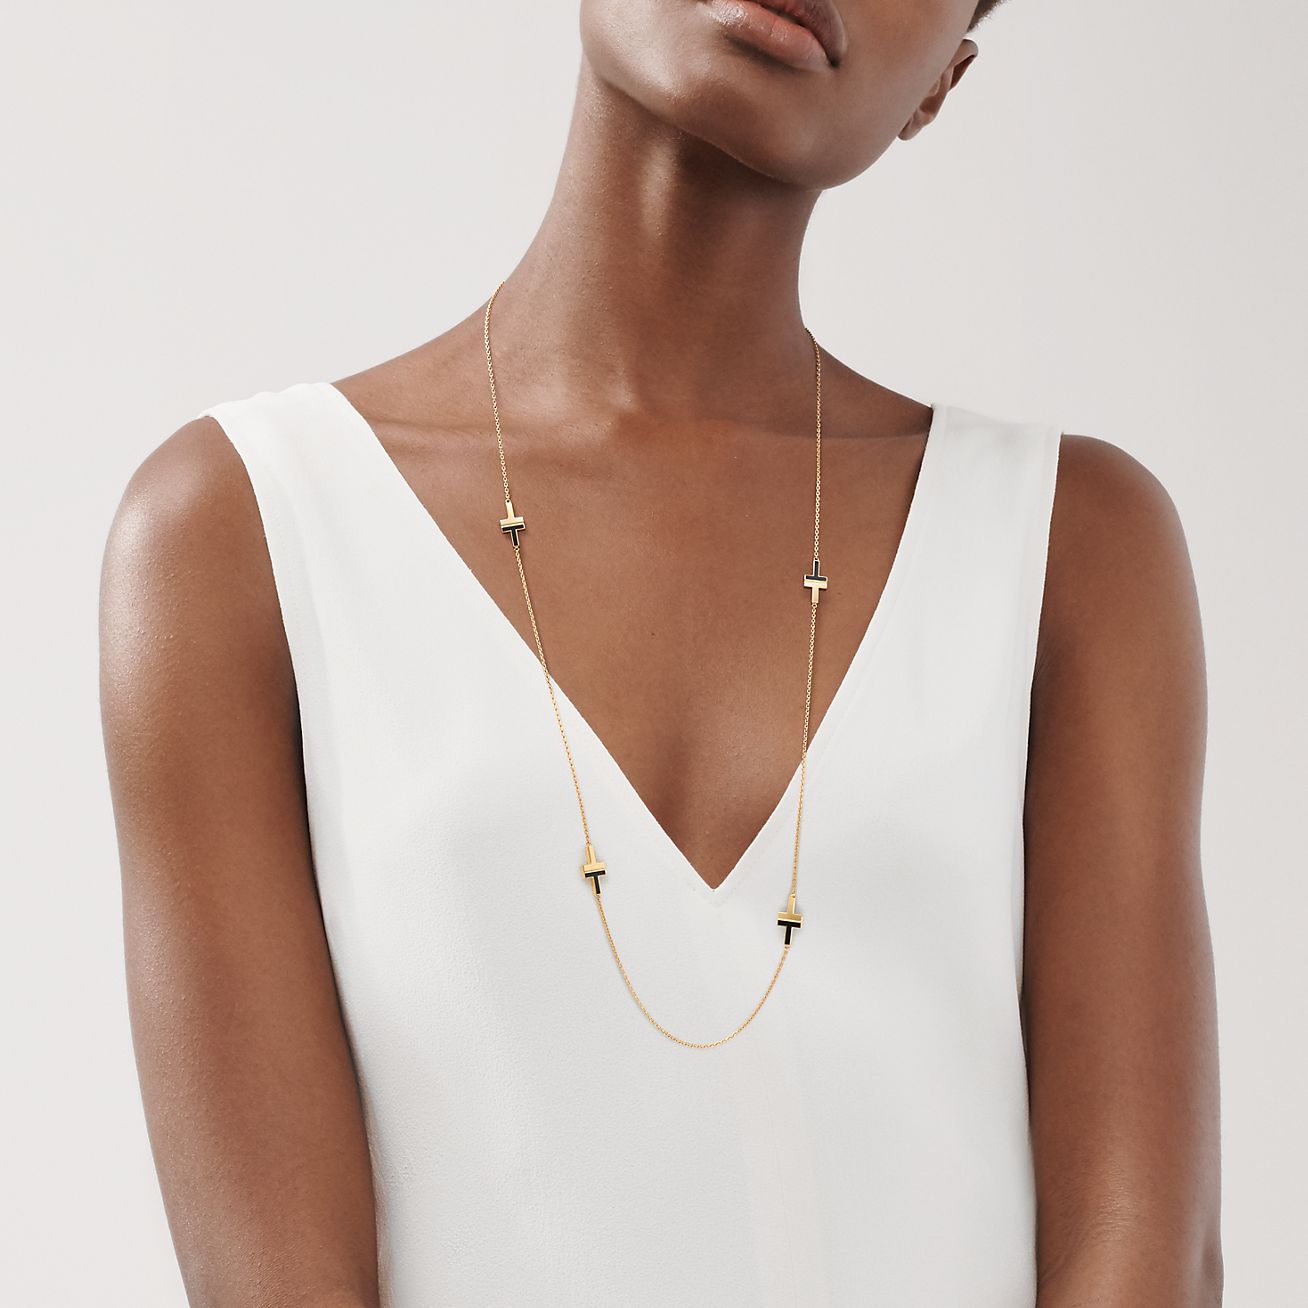 tiffany onyx necklace